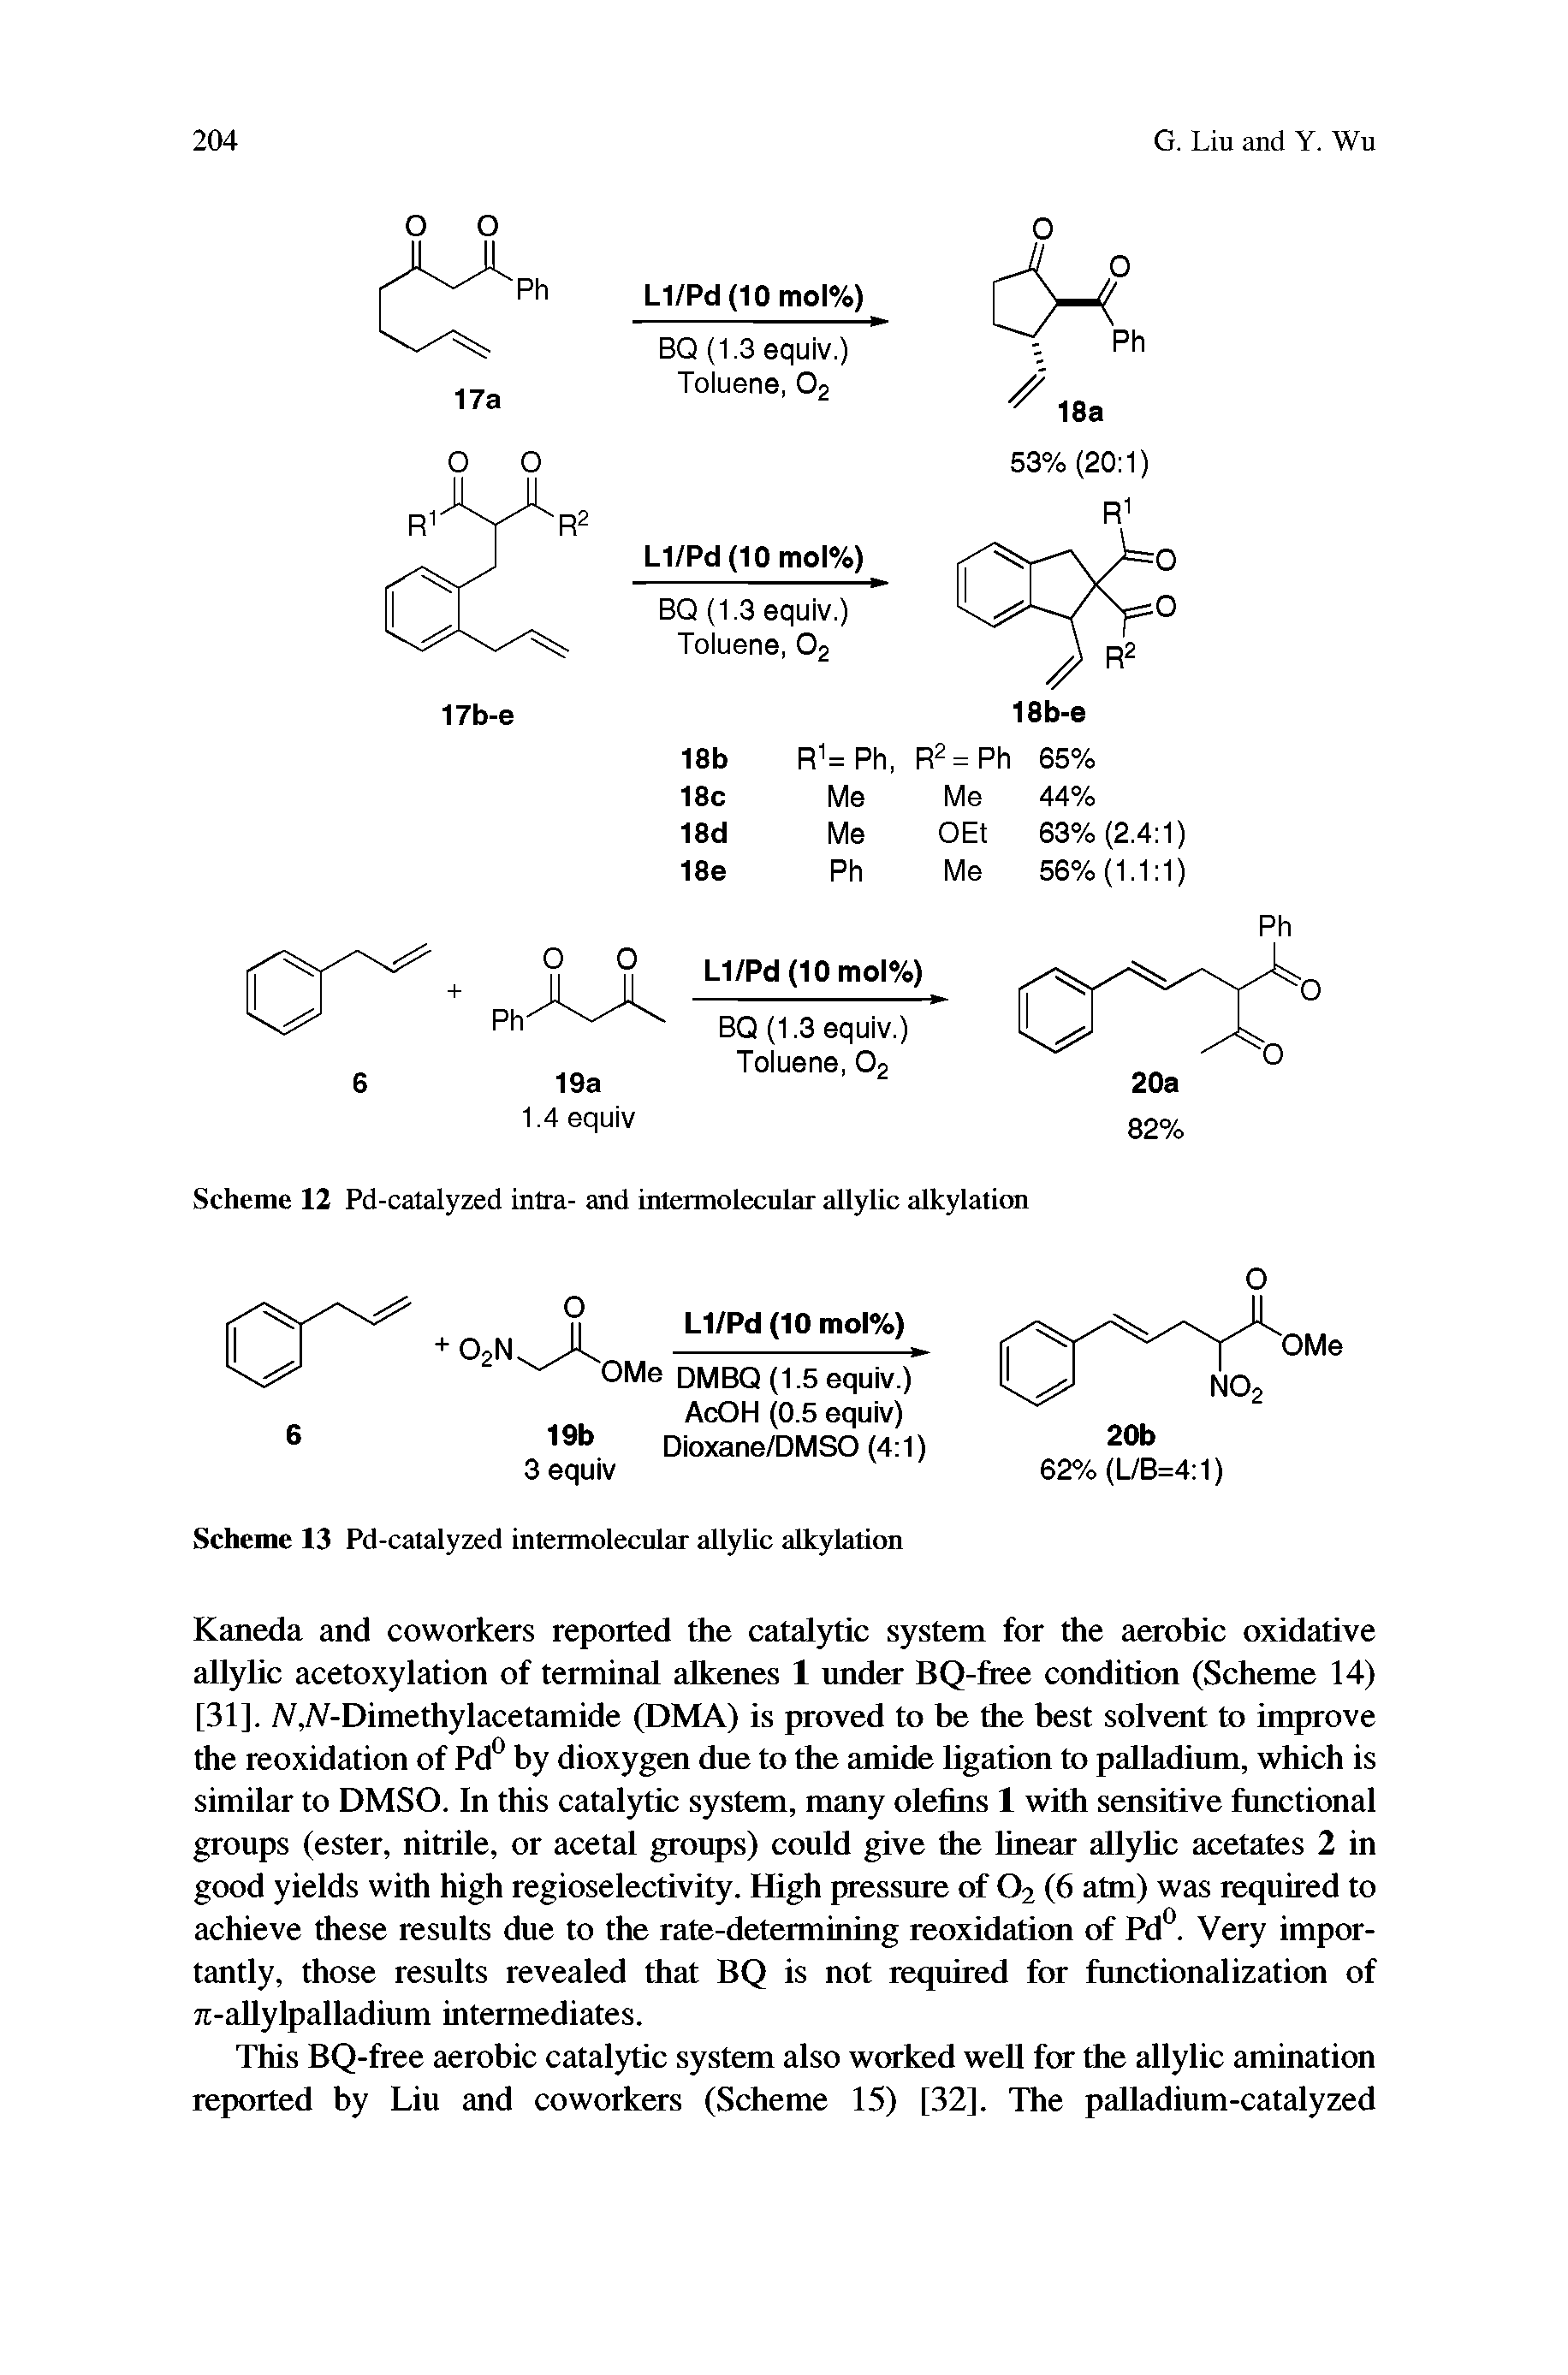 Scheme 12 Pd-catalyzed intra- and intermolecular allylic alkylation...